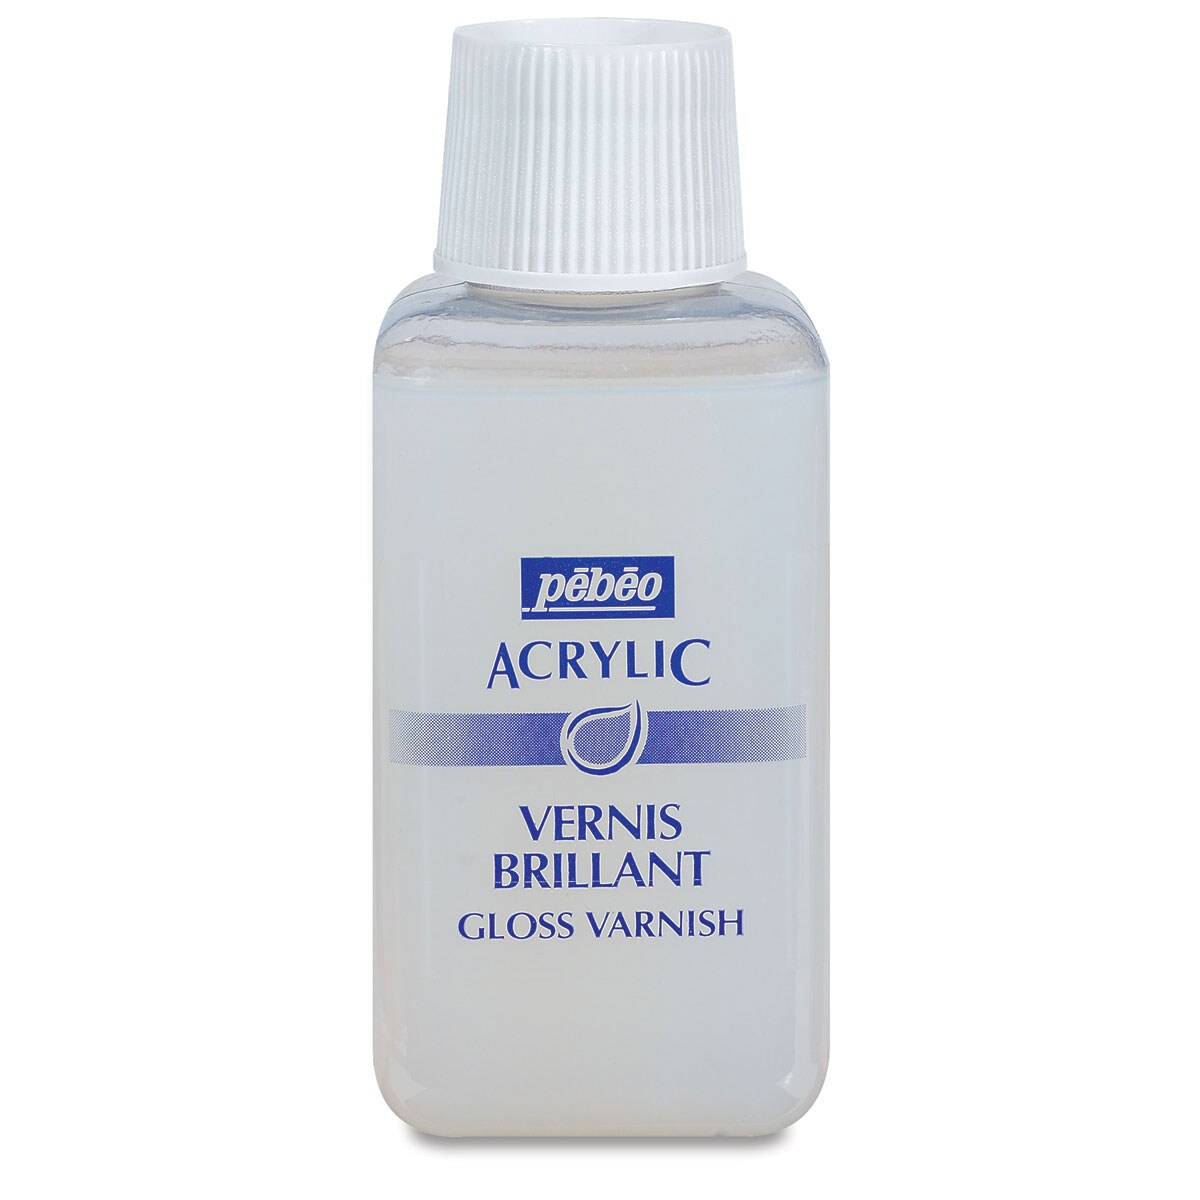 Pebeo Acrylic Polymer Varnish - Gloss, 250 ml bottle